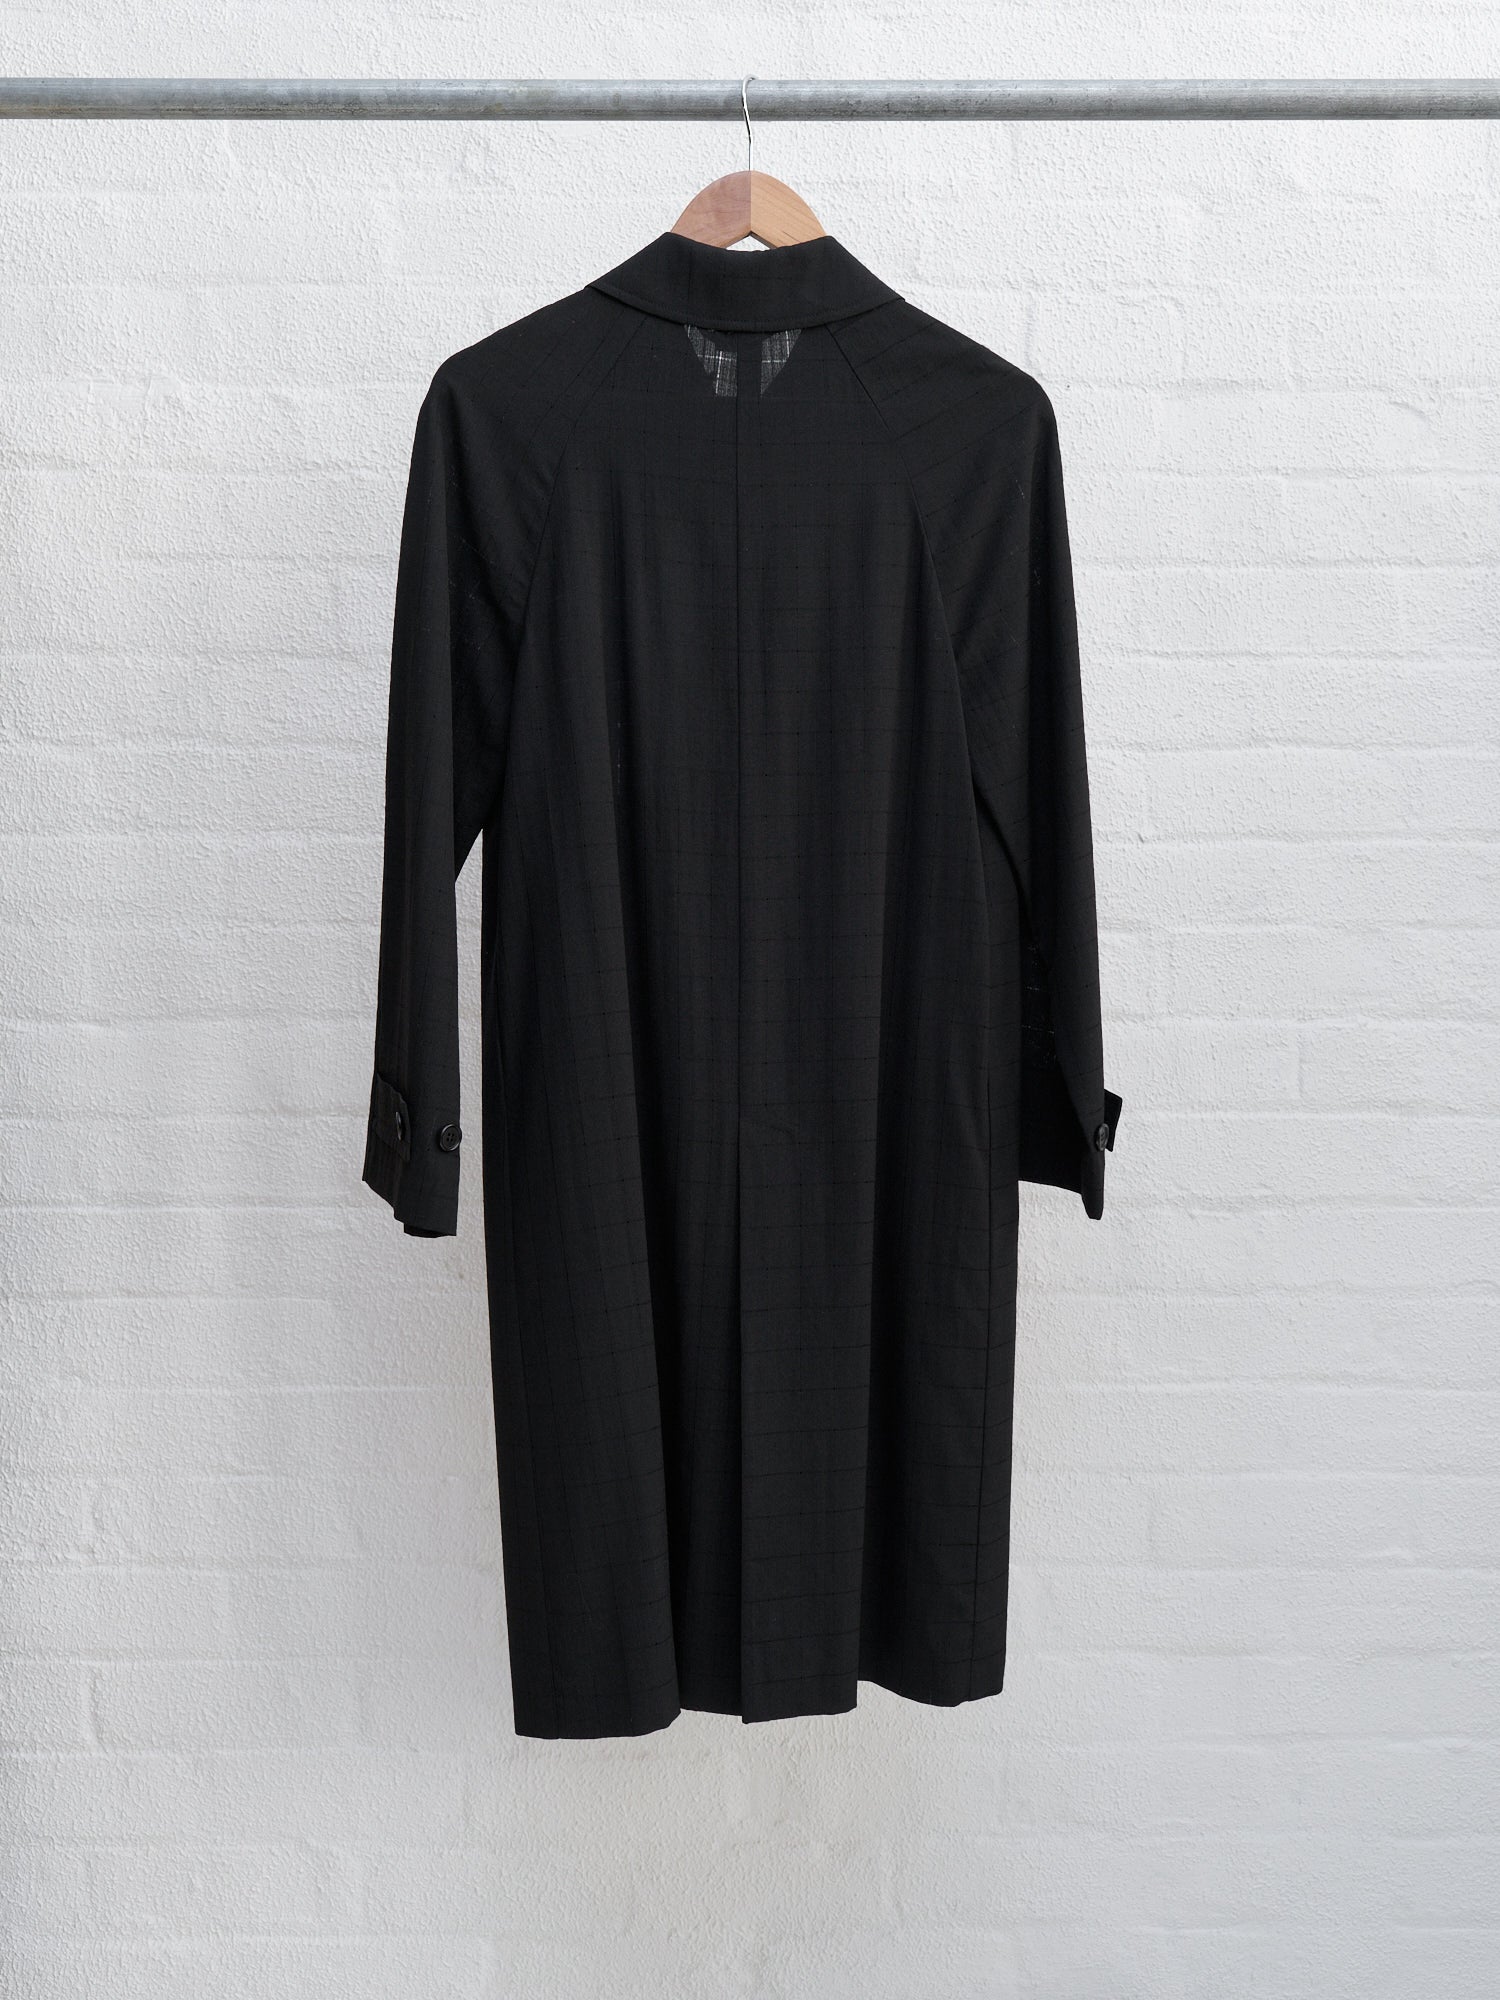 Helmut Lang 1990s 2000s black semi-sheer covered placket coat - size 38